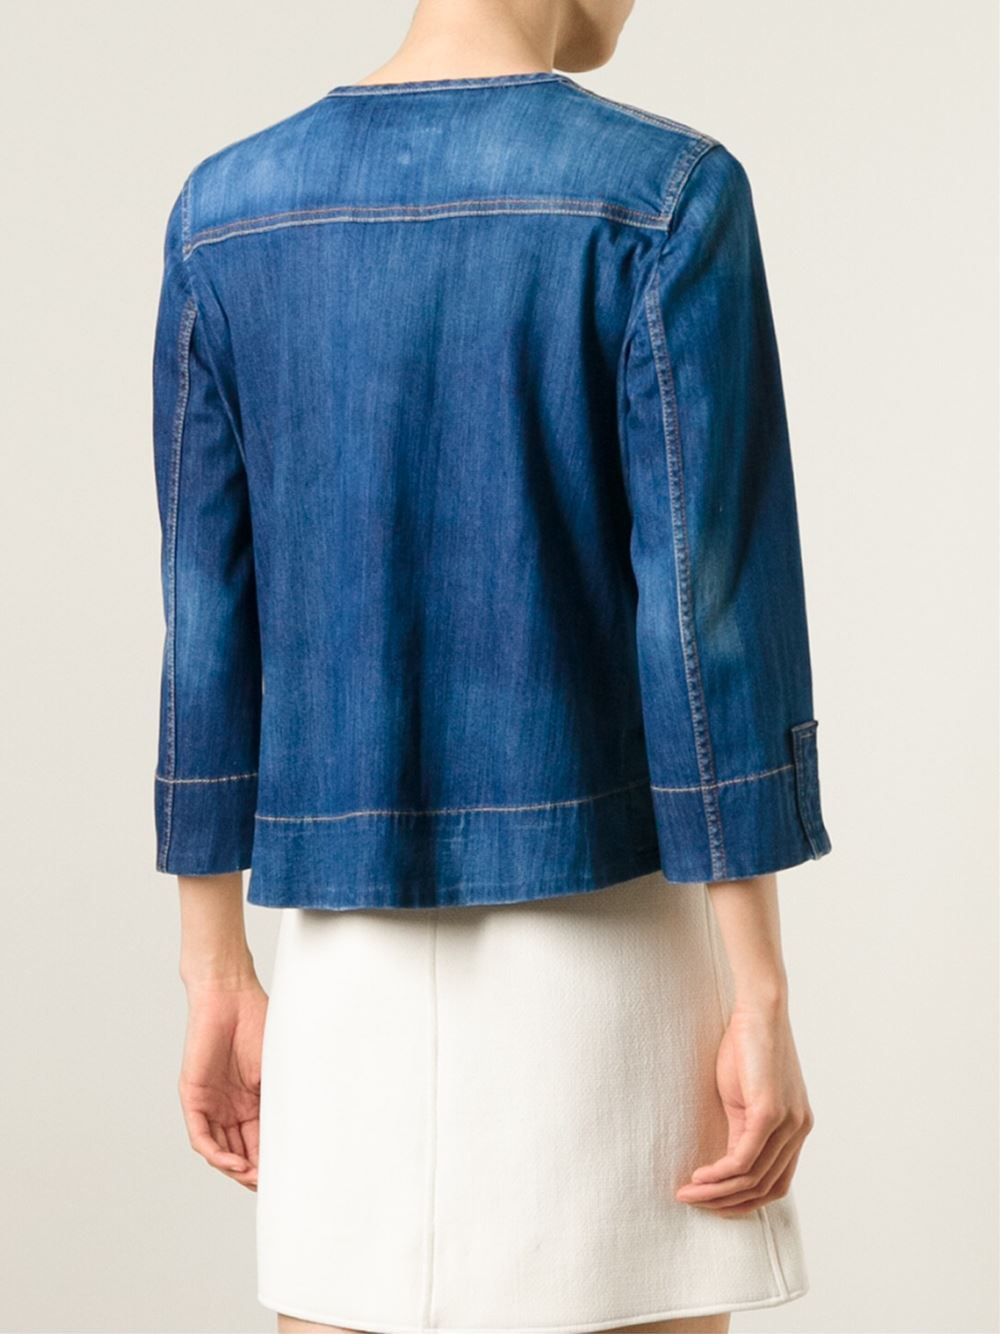 Armani Jeans Collarless Denim Jacket in Blue | Lyst